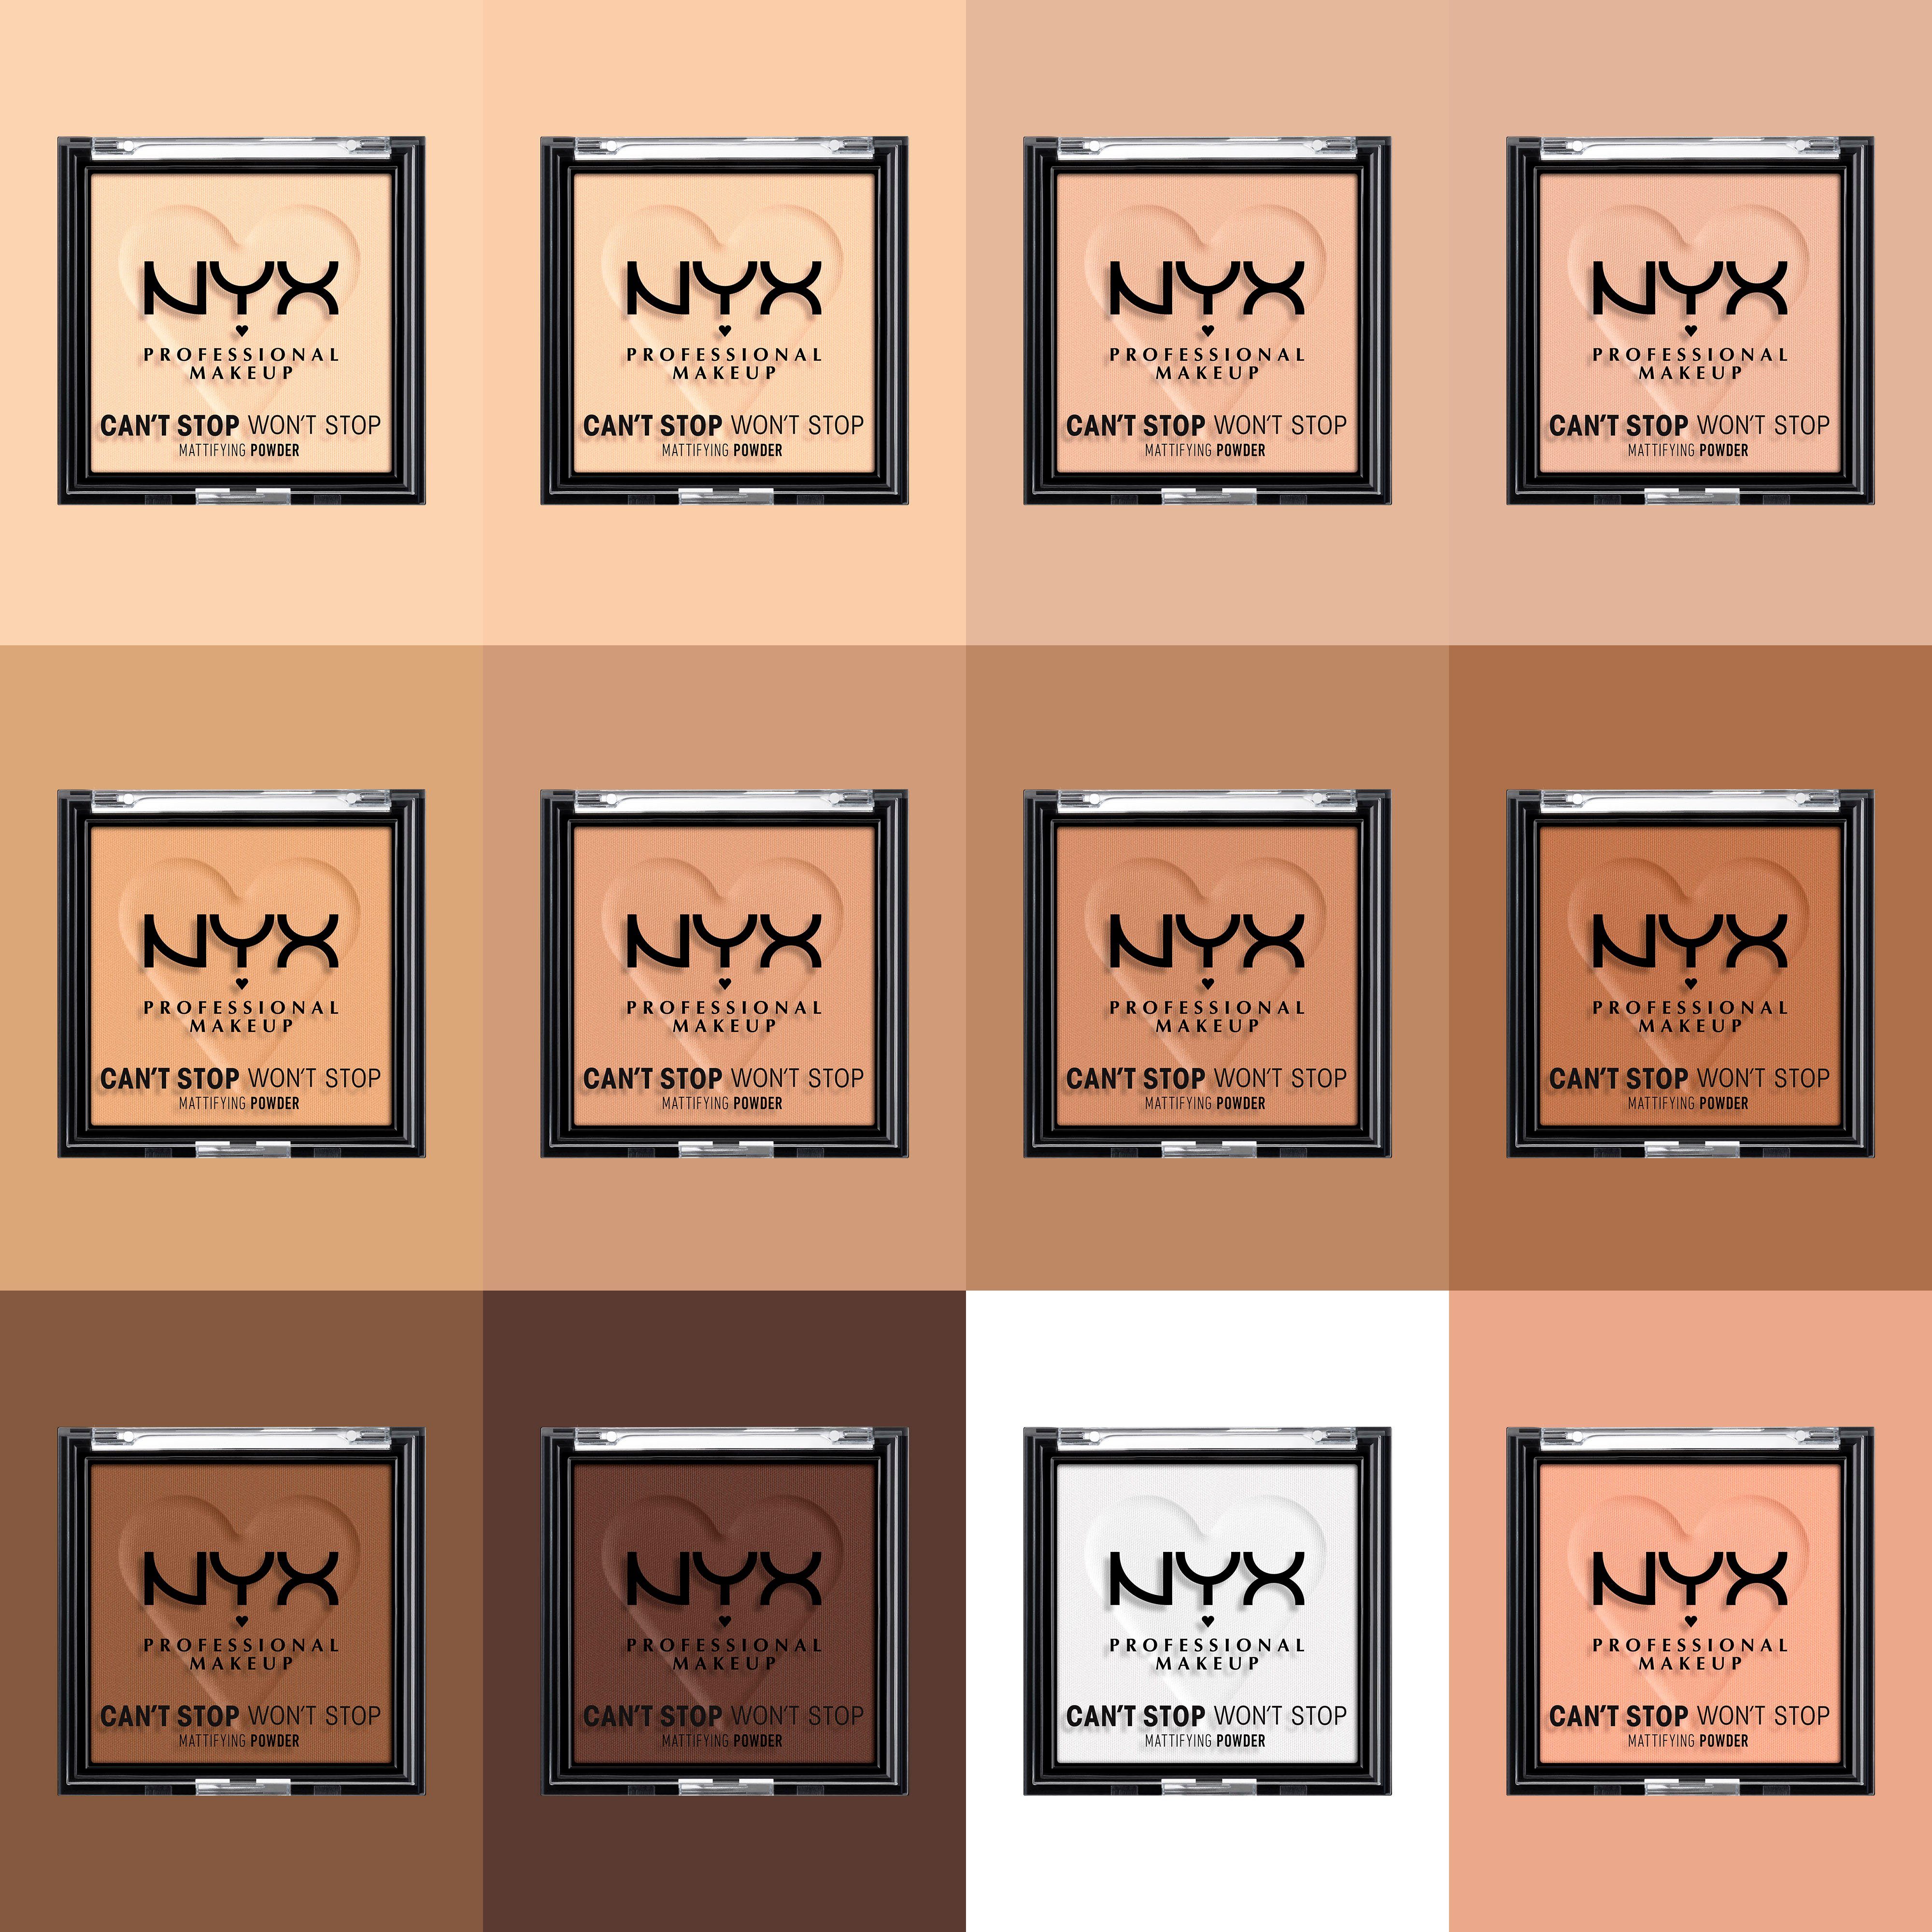 Professional NYX Makeup Fair CSWS Mattifying 01 Puder Powder